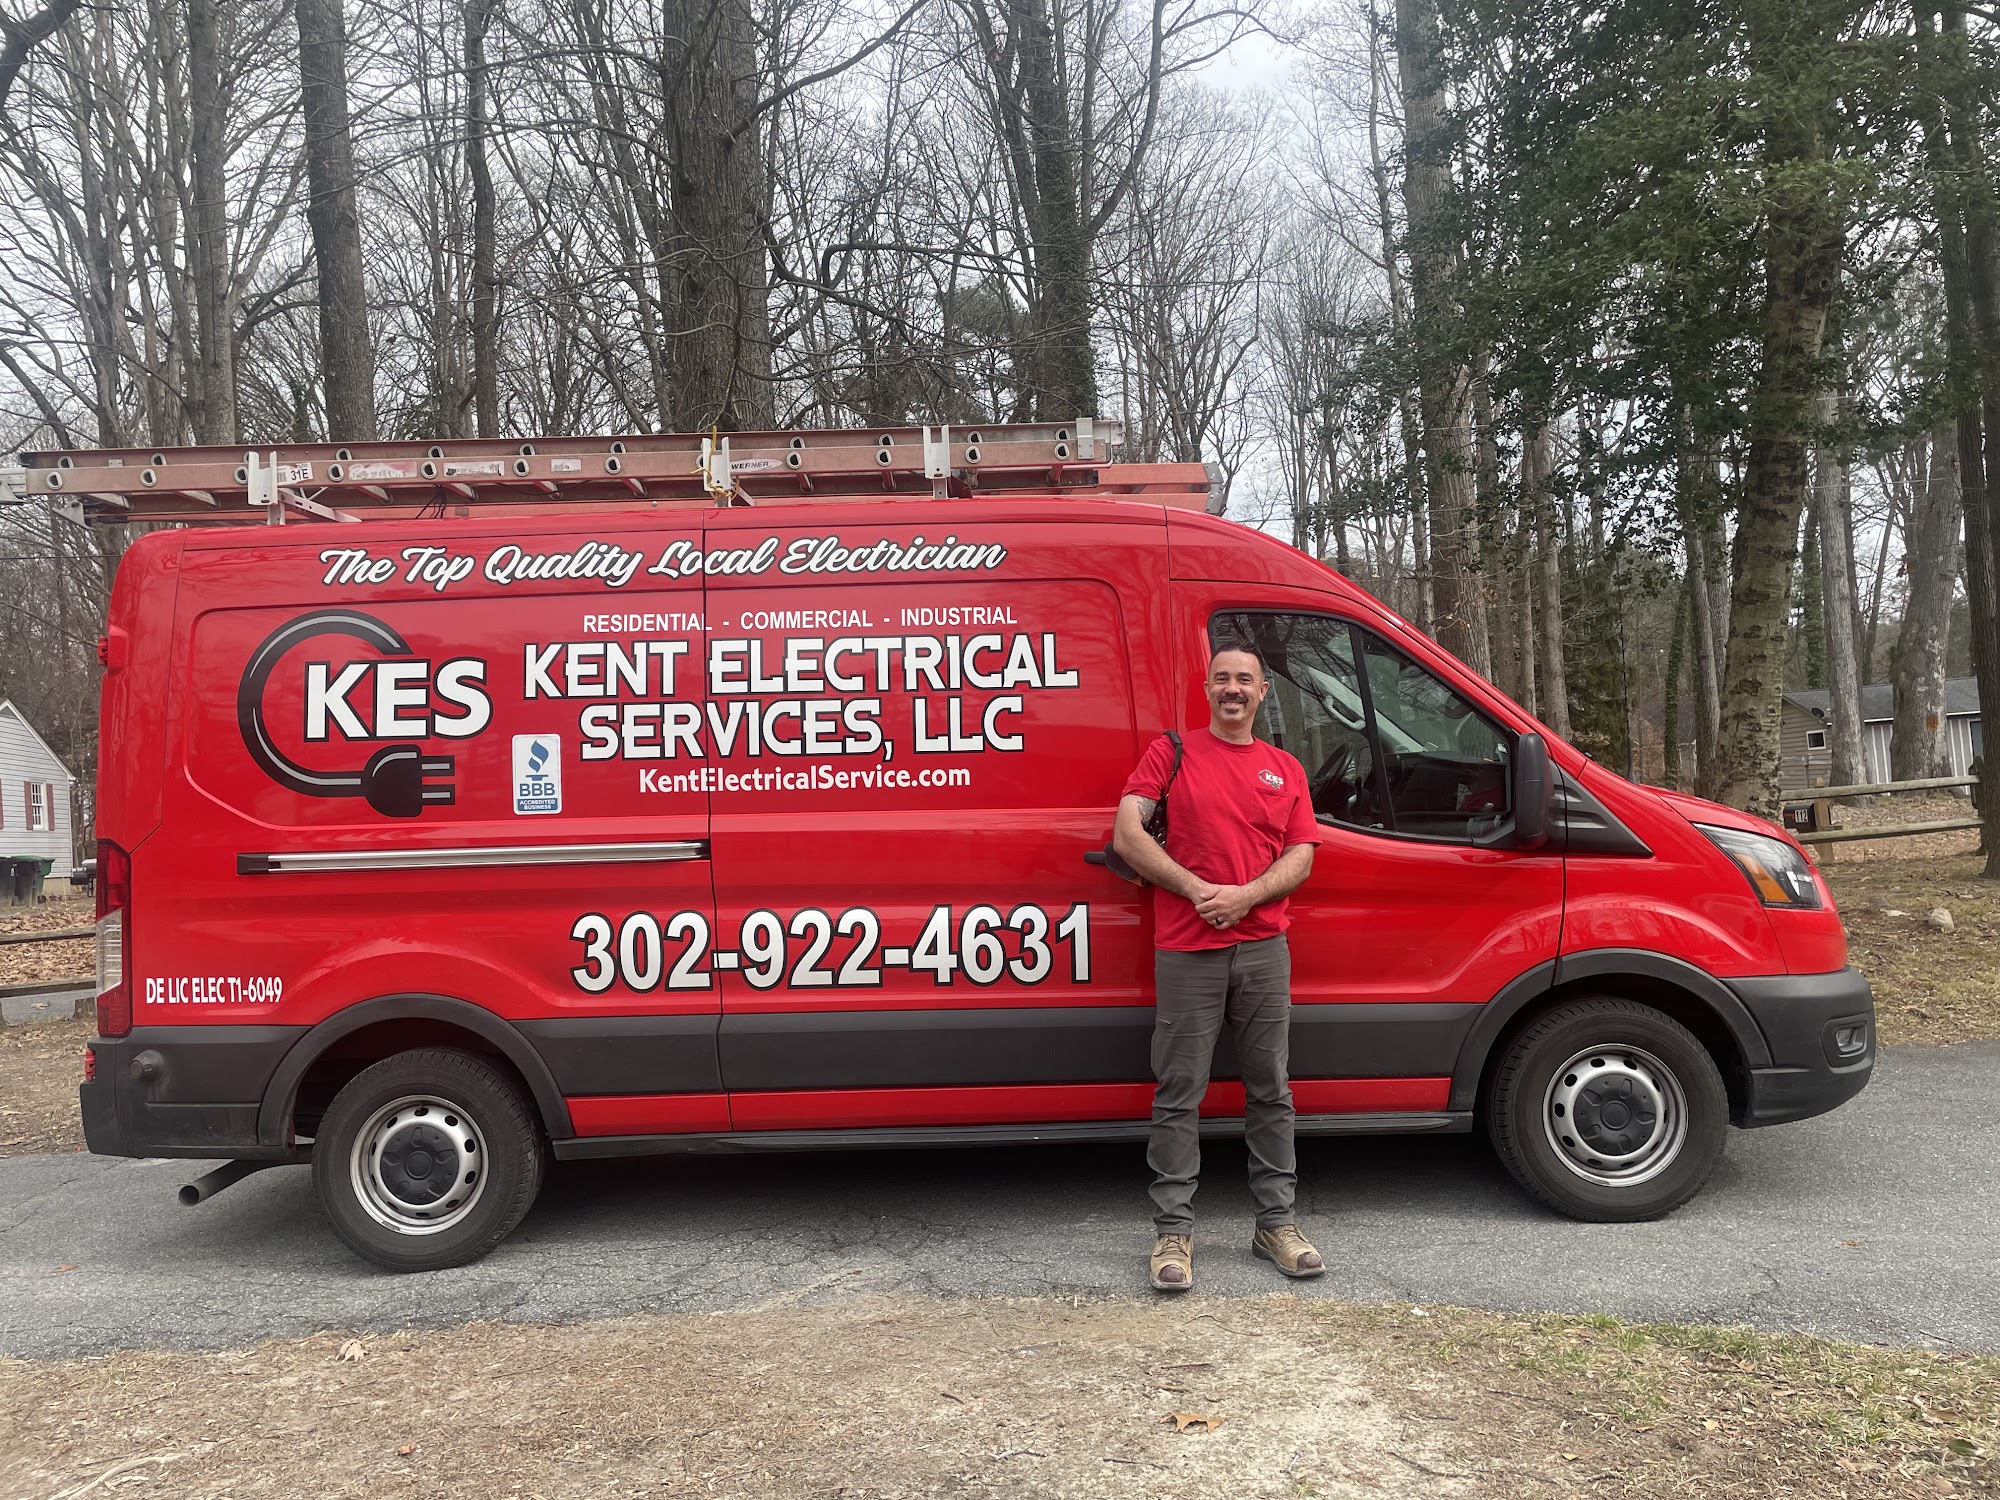 Kent Electrical Services, LLC